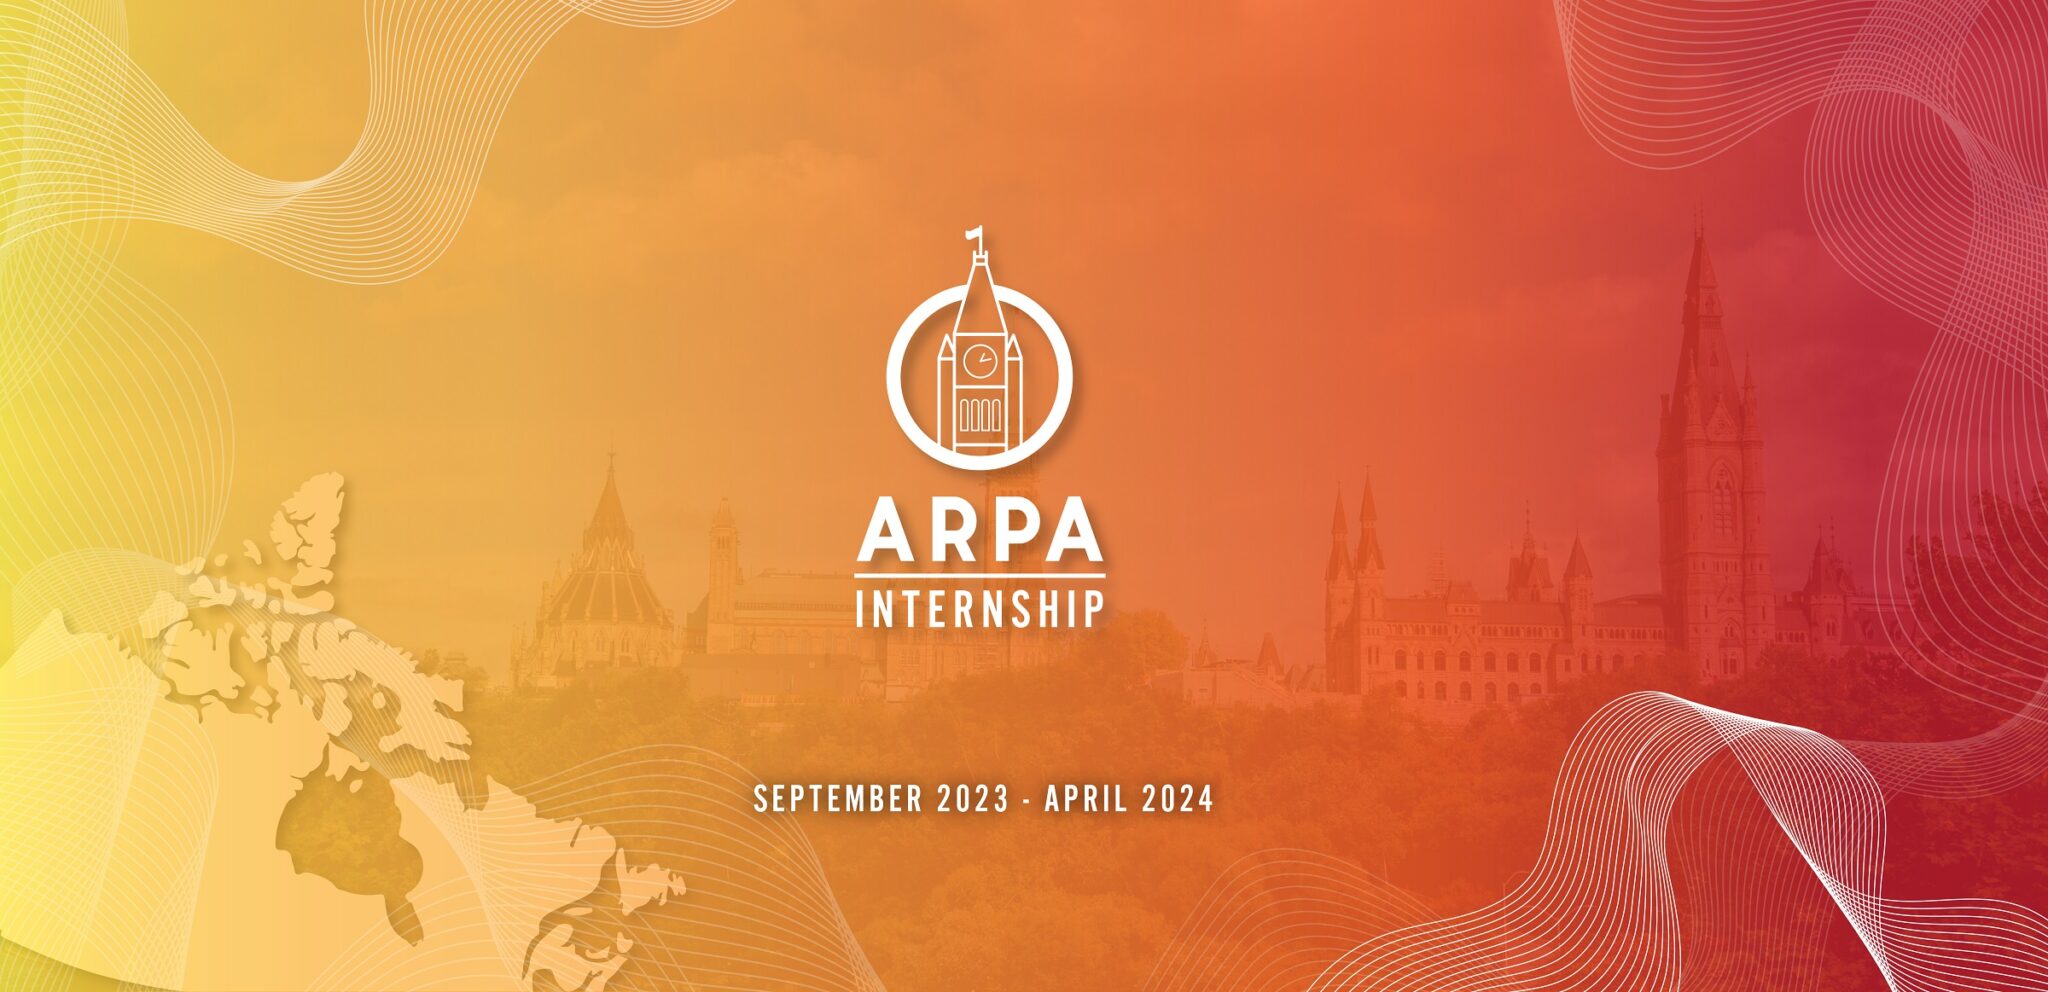 ARPA Internship